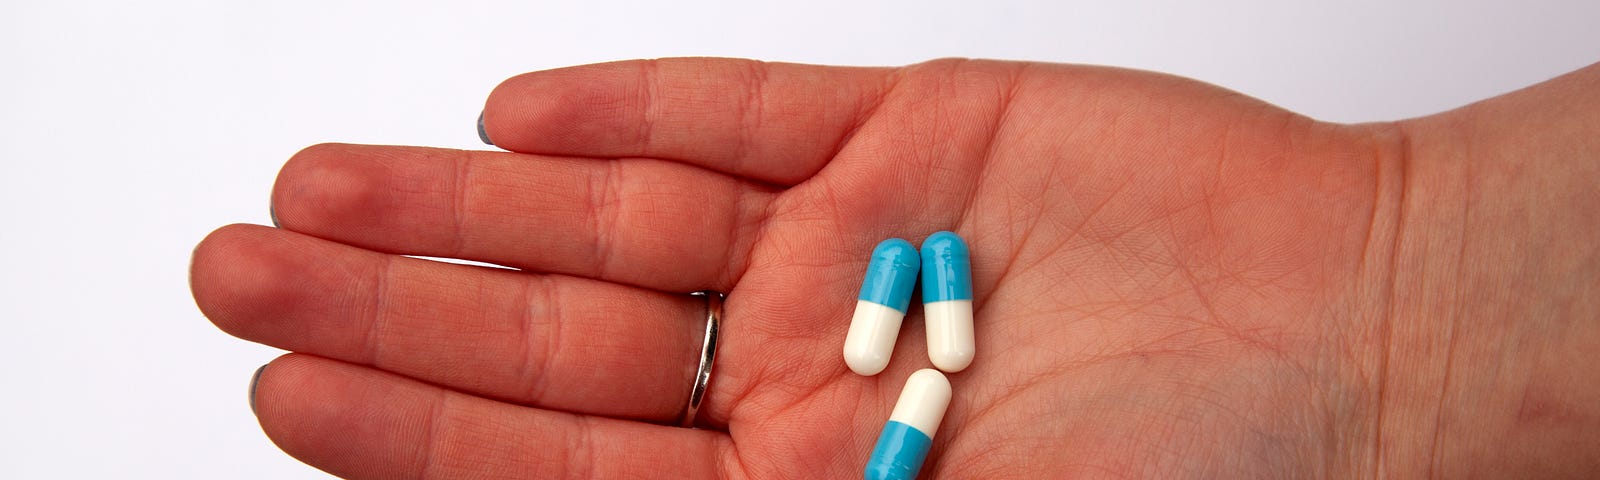 Hand holding medicine capsules